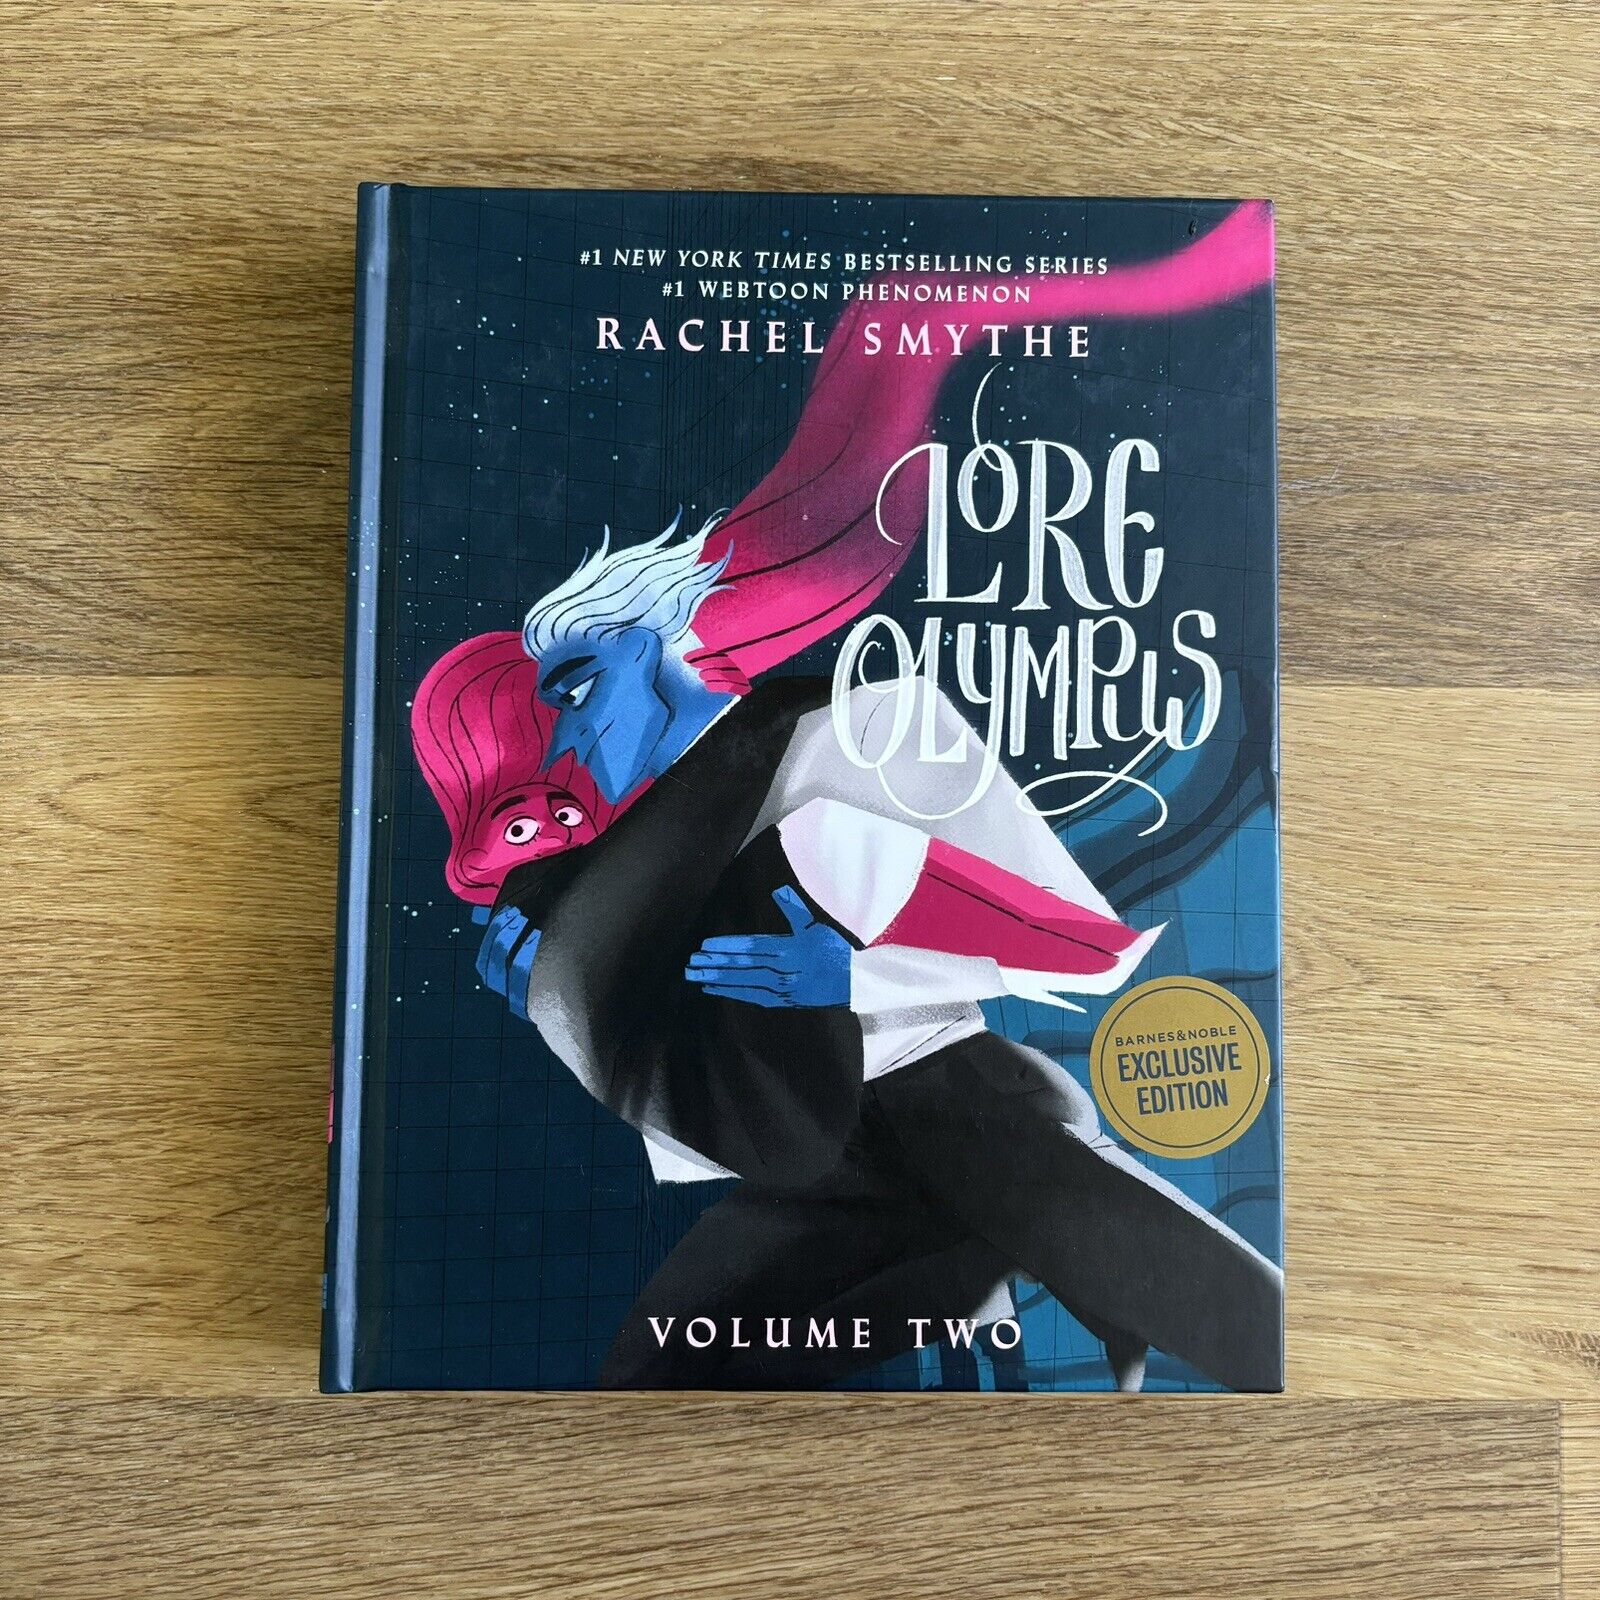 Lore Olympus Volume 2 Hardcover Barnes & Noble Exclusive Edition Rachel Smythe